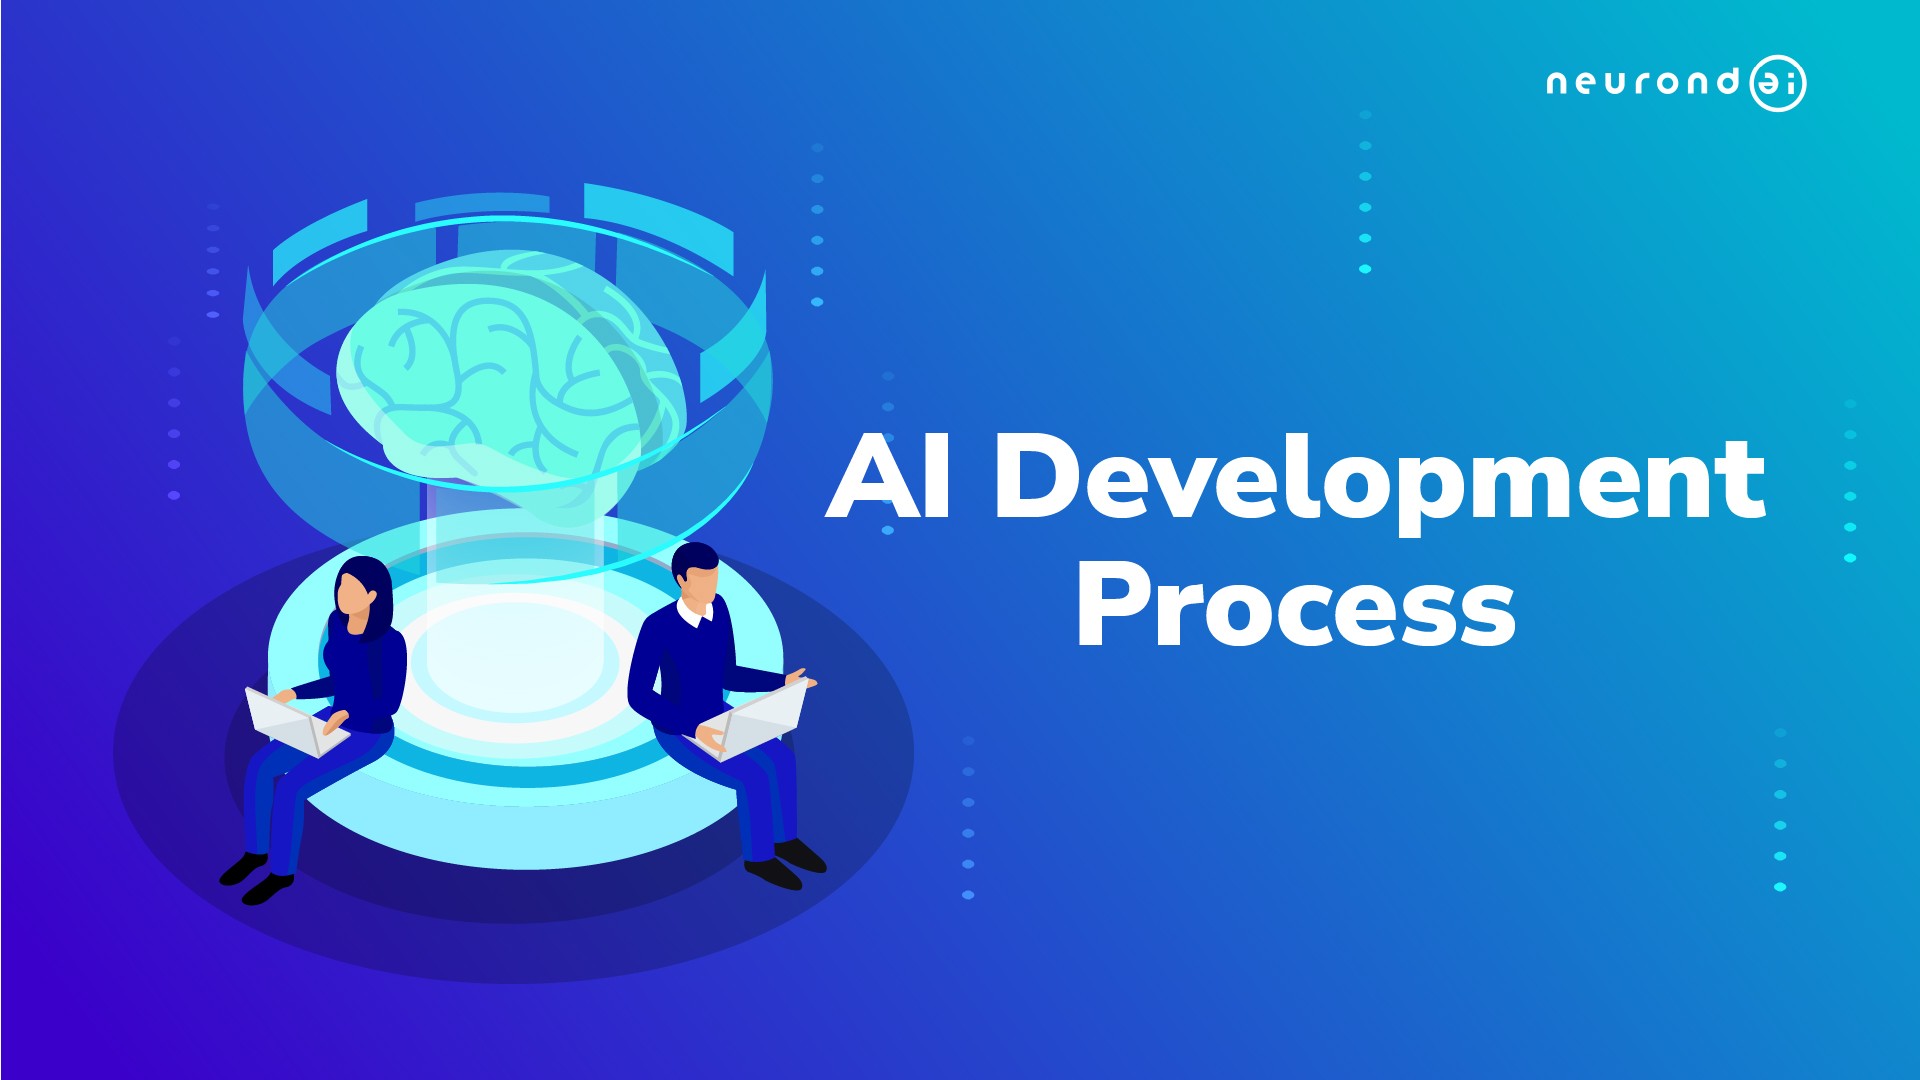 AI Development Process: What Should It Look Like